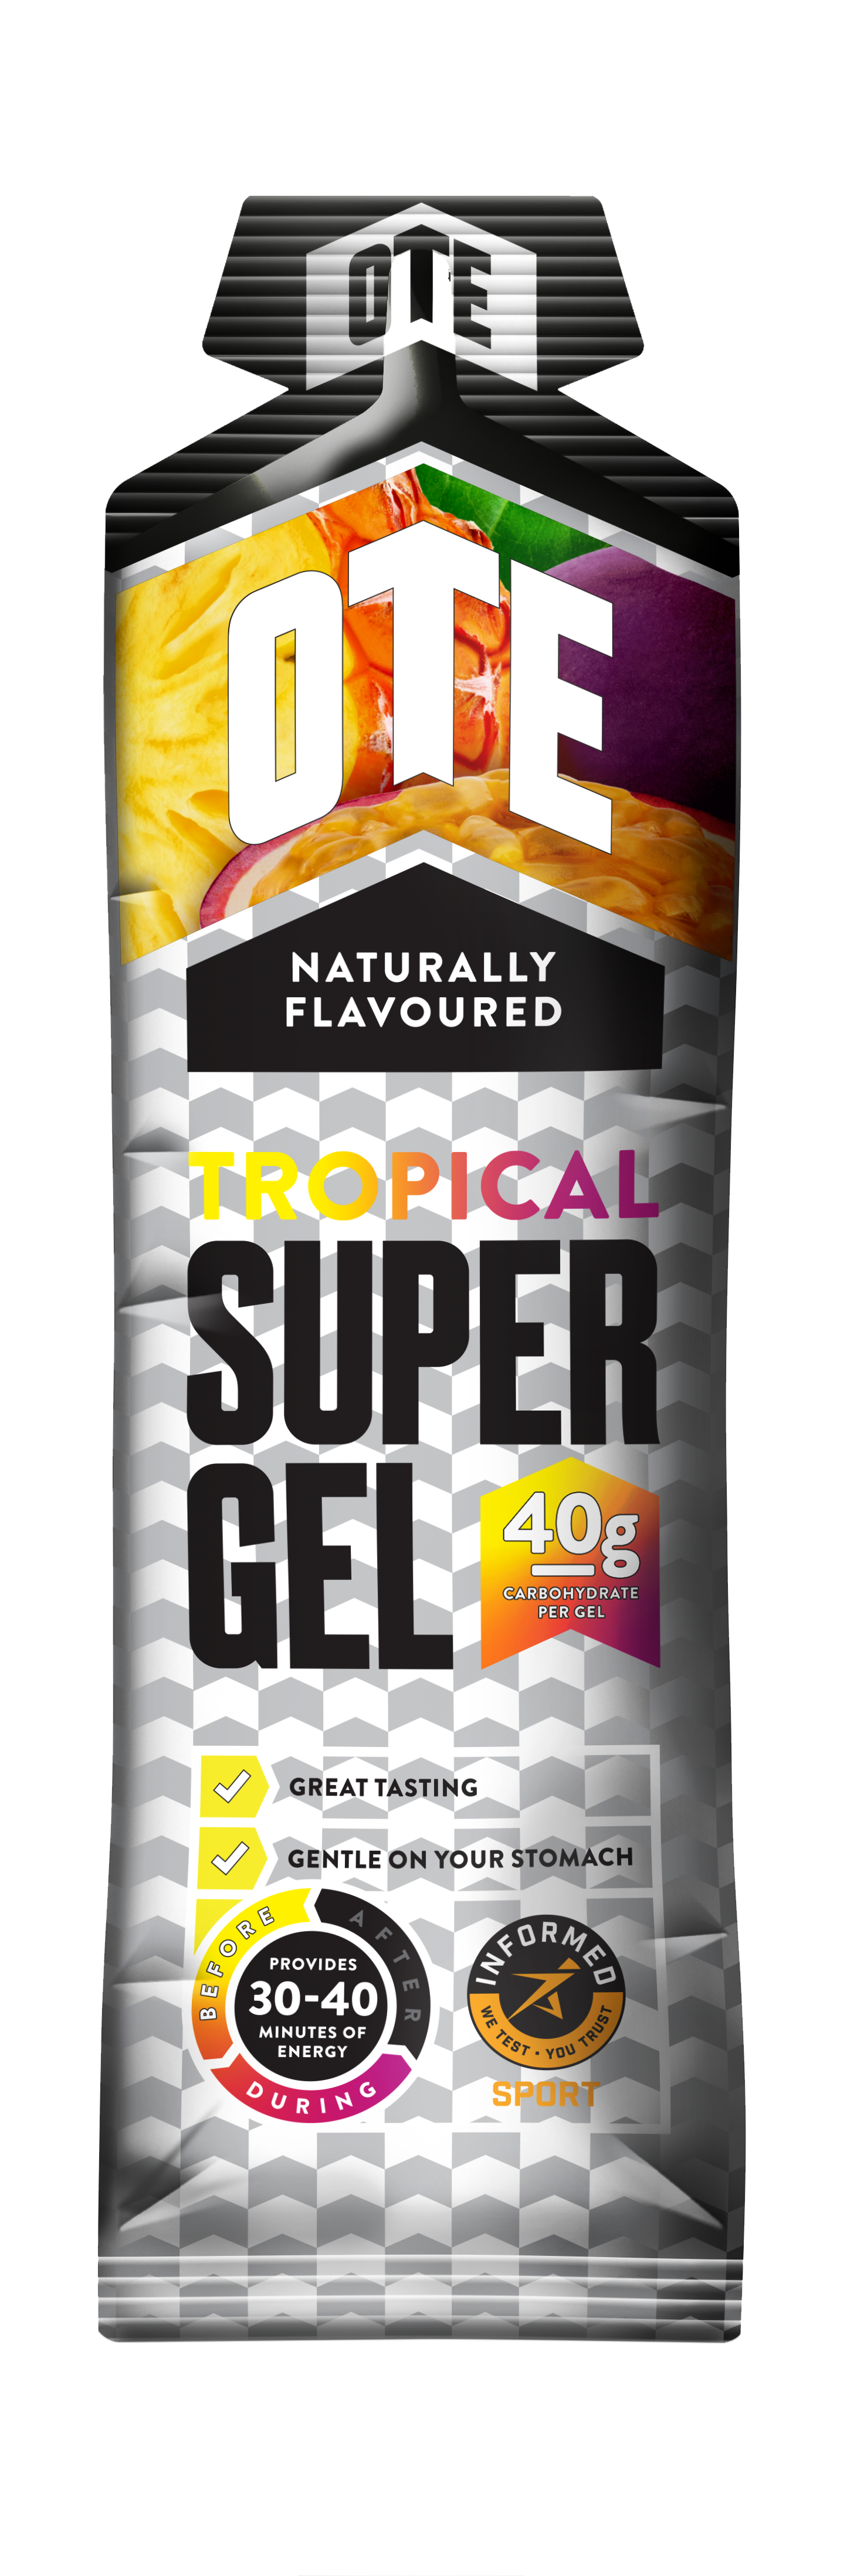 Tropical Super gel